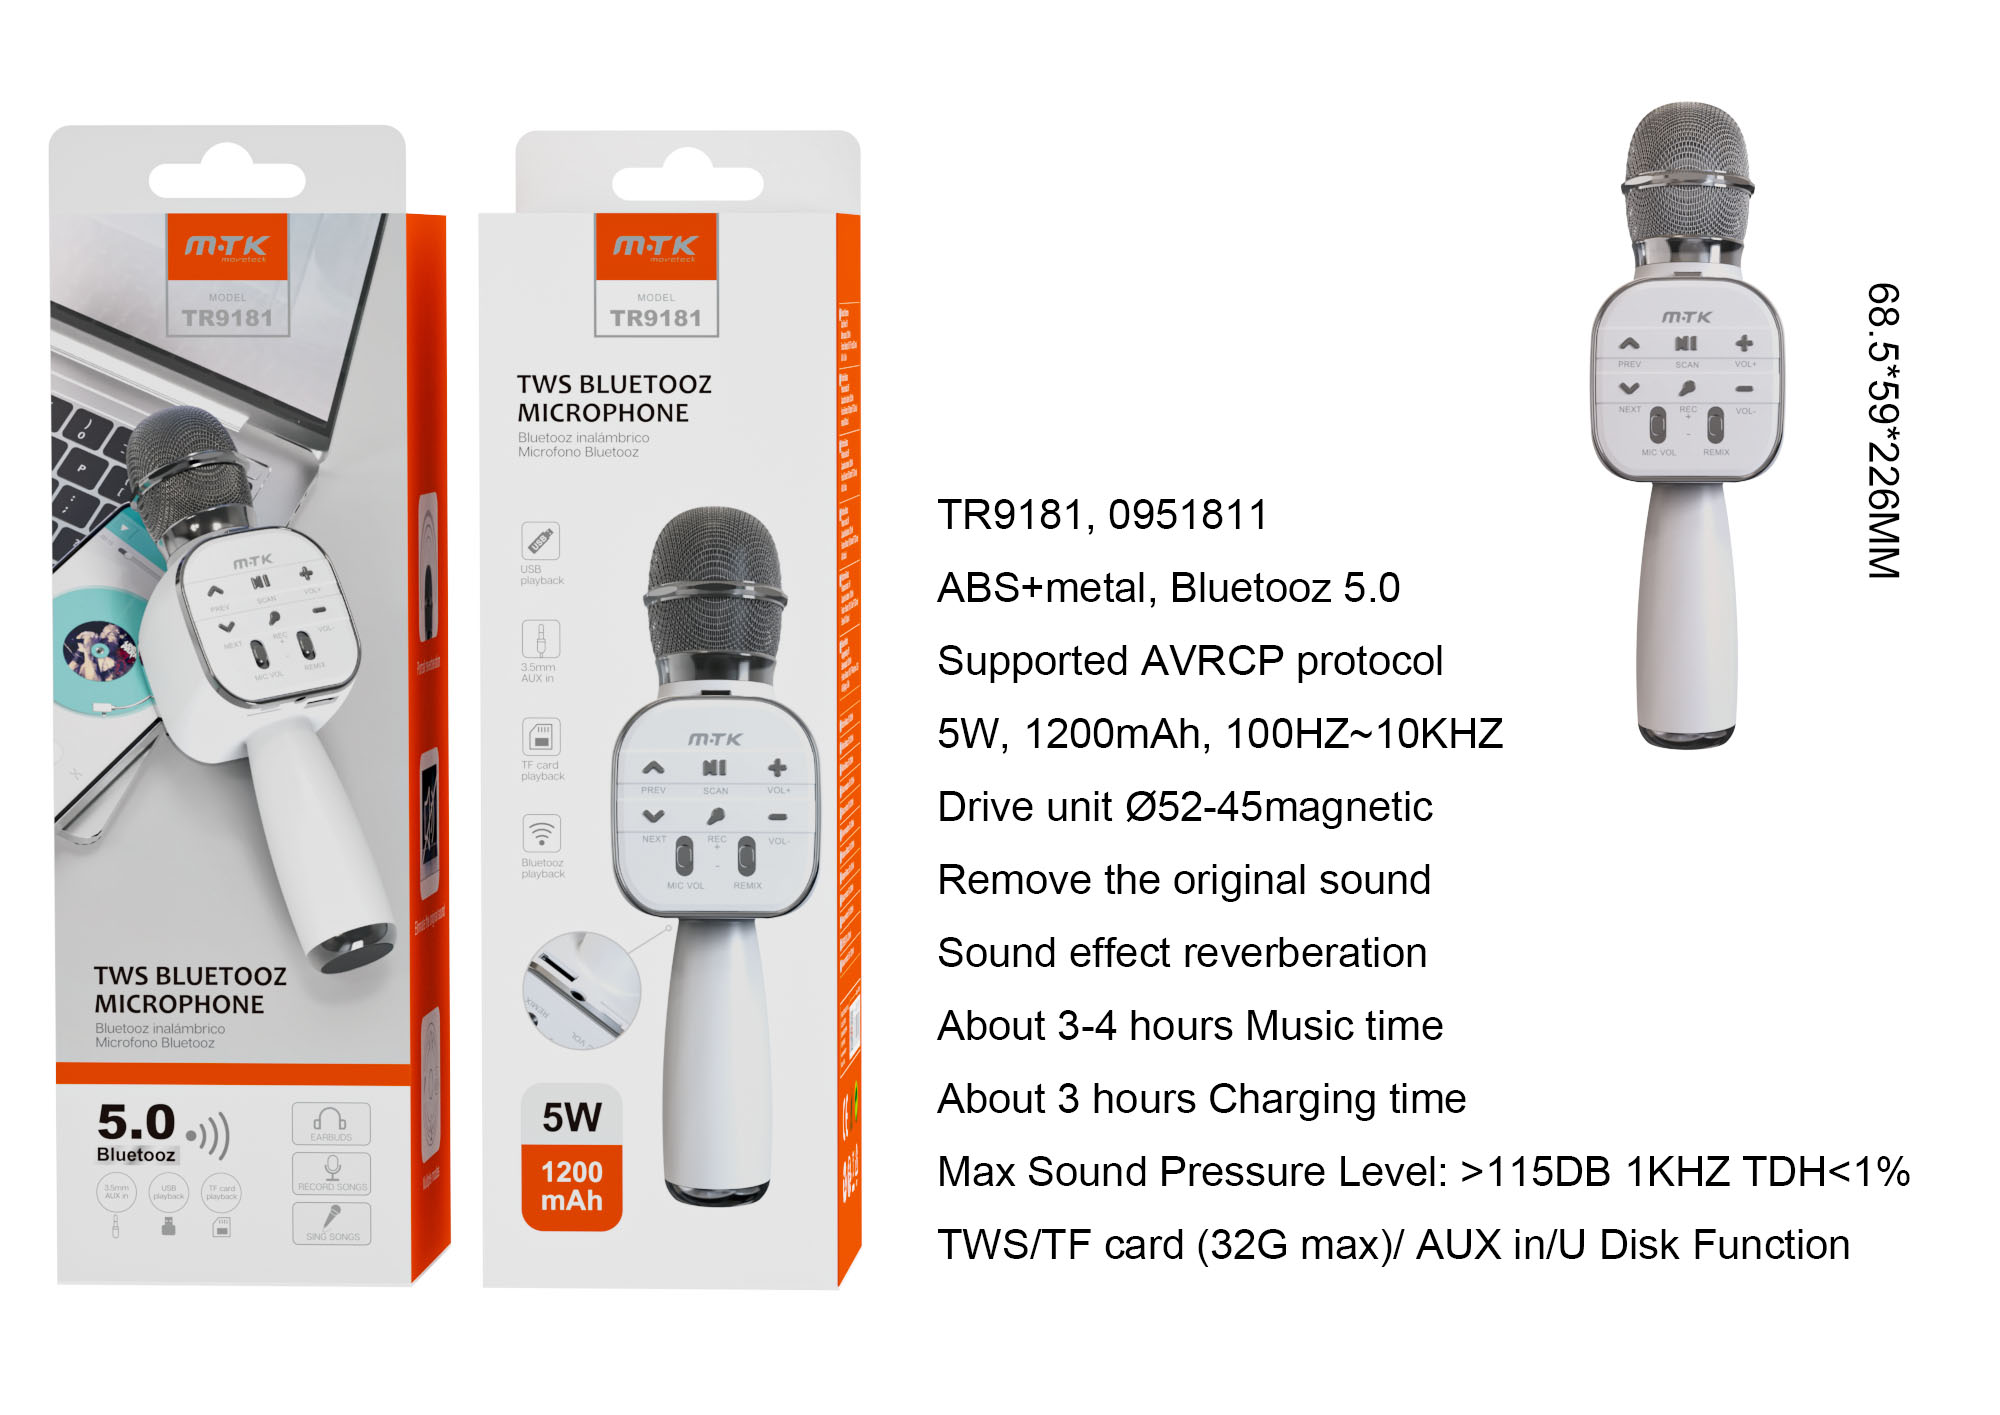 TR9181 NE+BL Microfono TWS Bluetooth 5.0 AVRCP, Frecuncia100Hz-10KHz, Soporta Entrada de audio/USB/TF (32GMax), Bateria 1200mAh/5W, Negro+Blanco